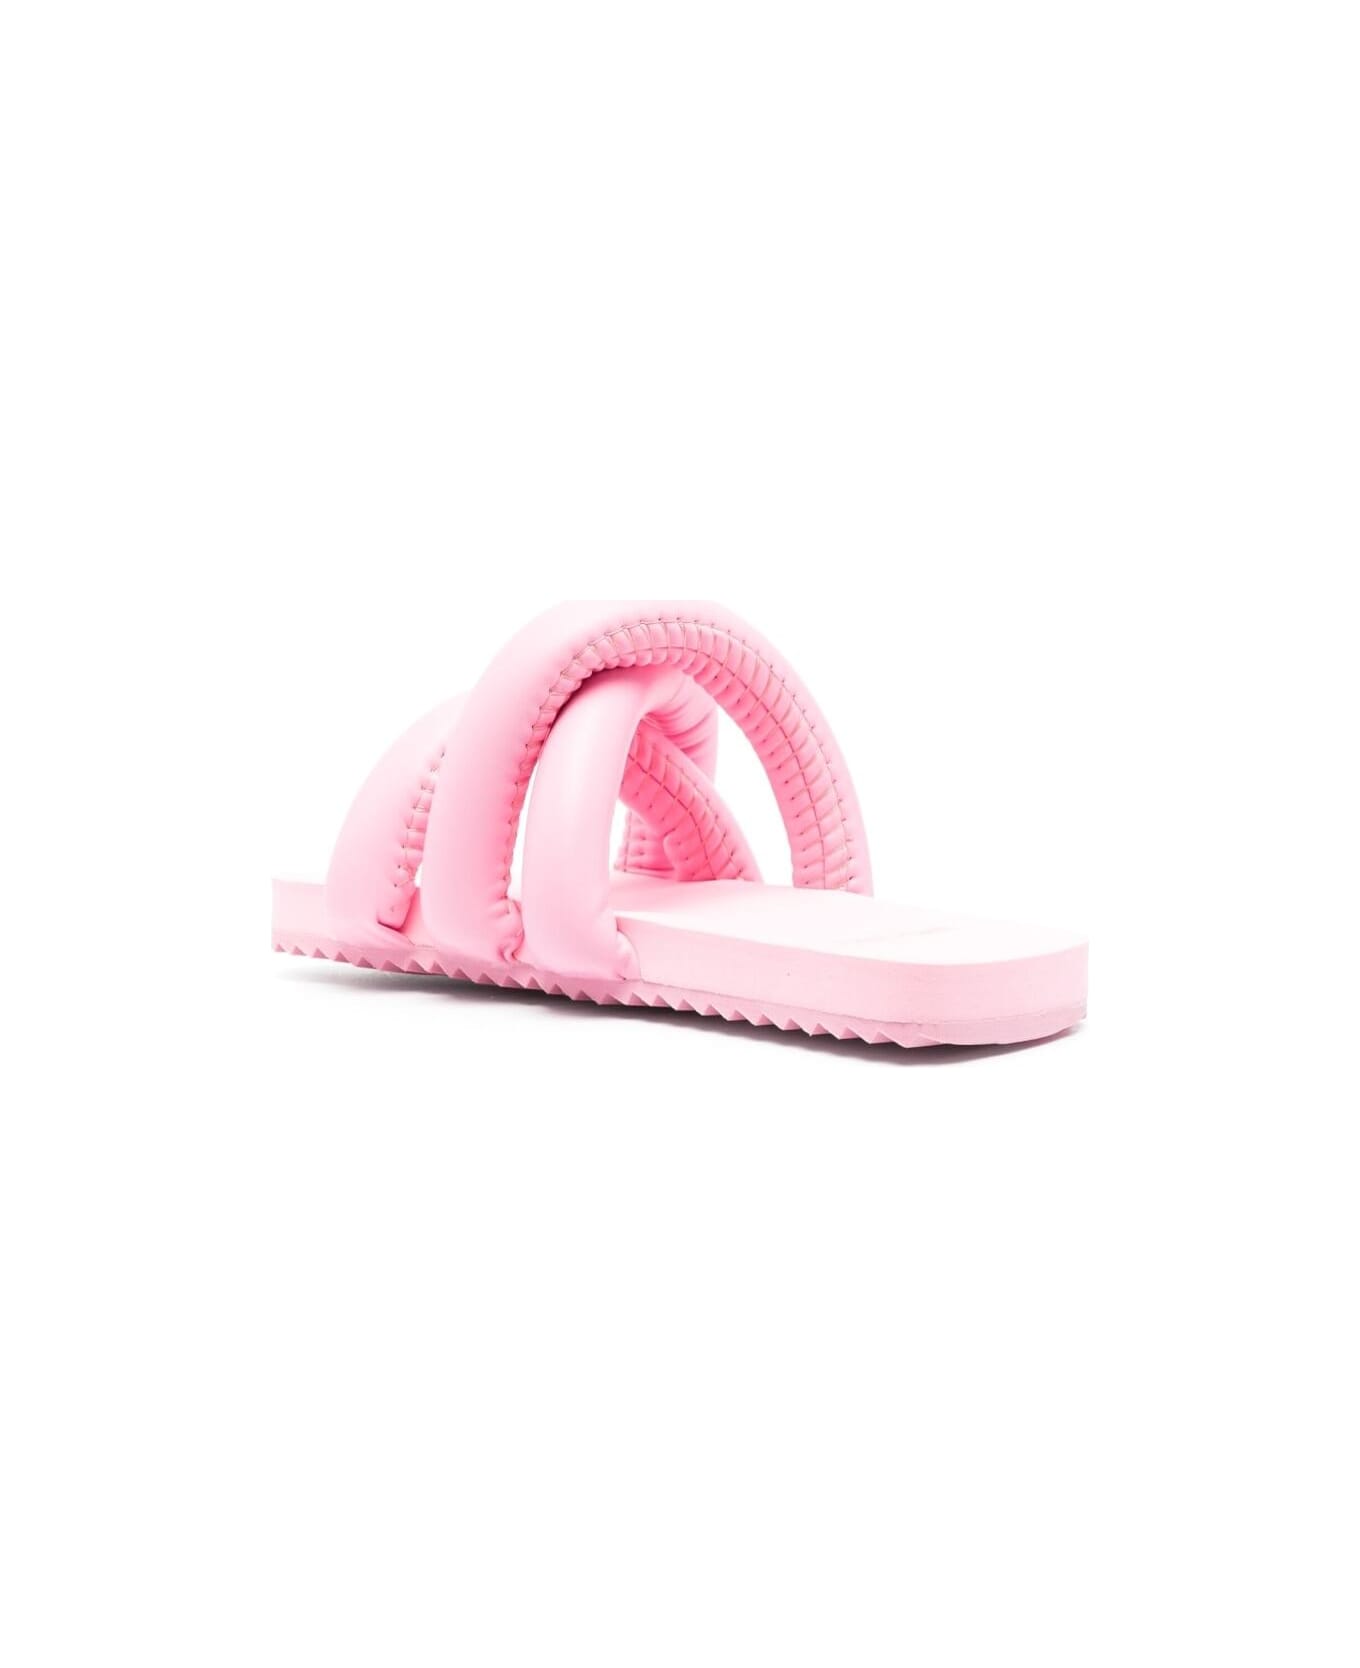 YUME YUME Tyre Yume Woman's Vegan Leather Padded Slide Sandals - Pink